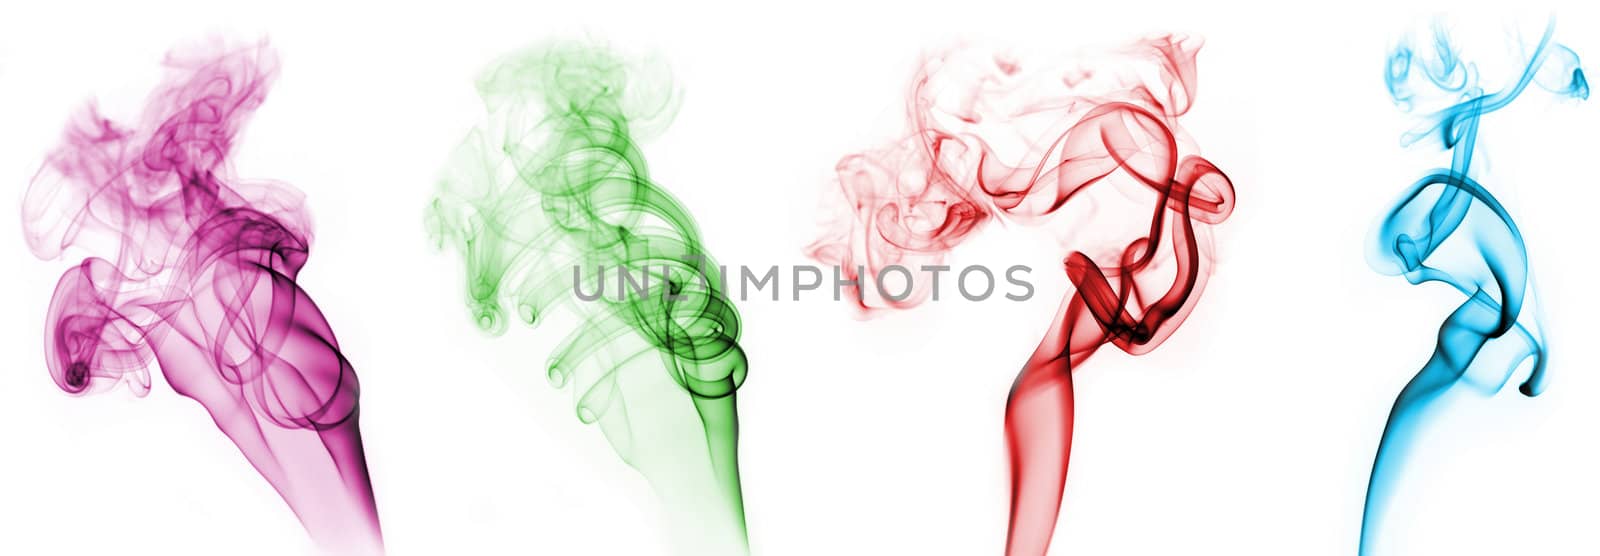 Colorful smoke by kwasny221